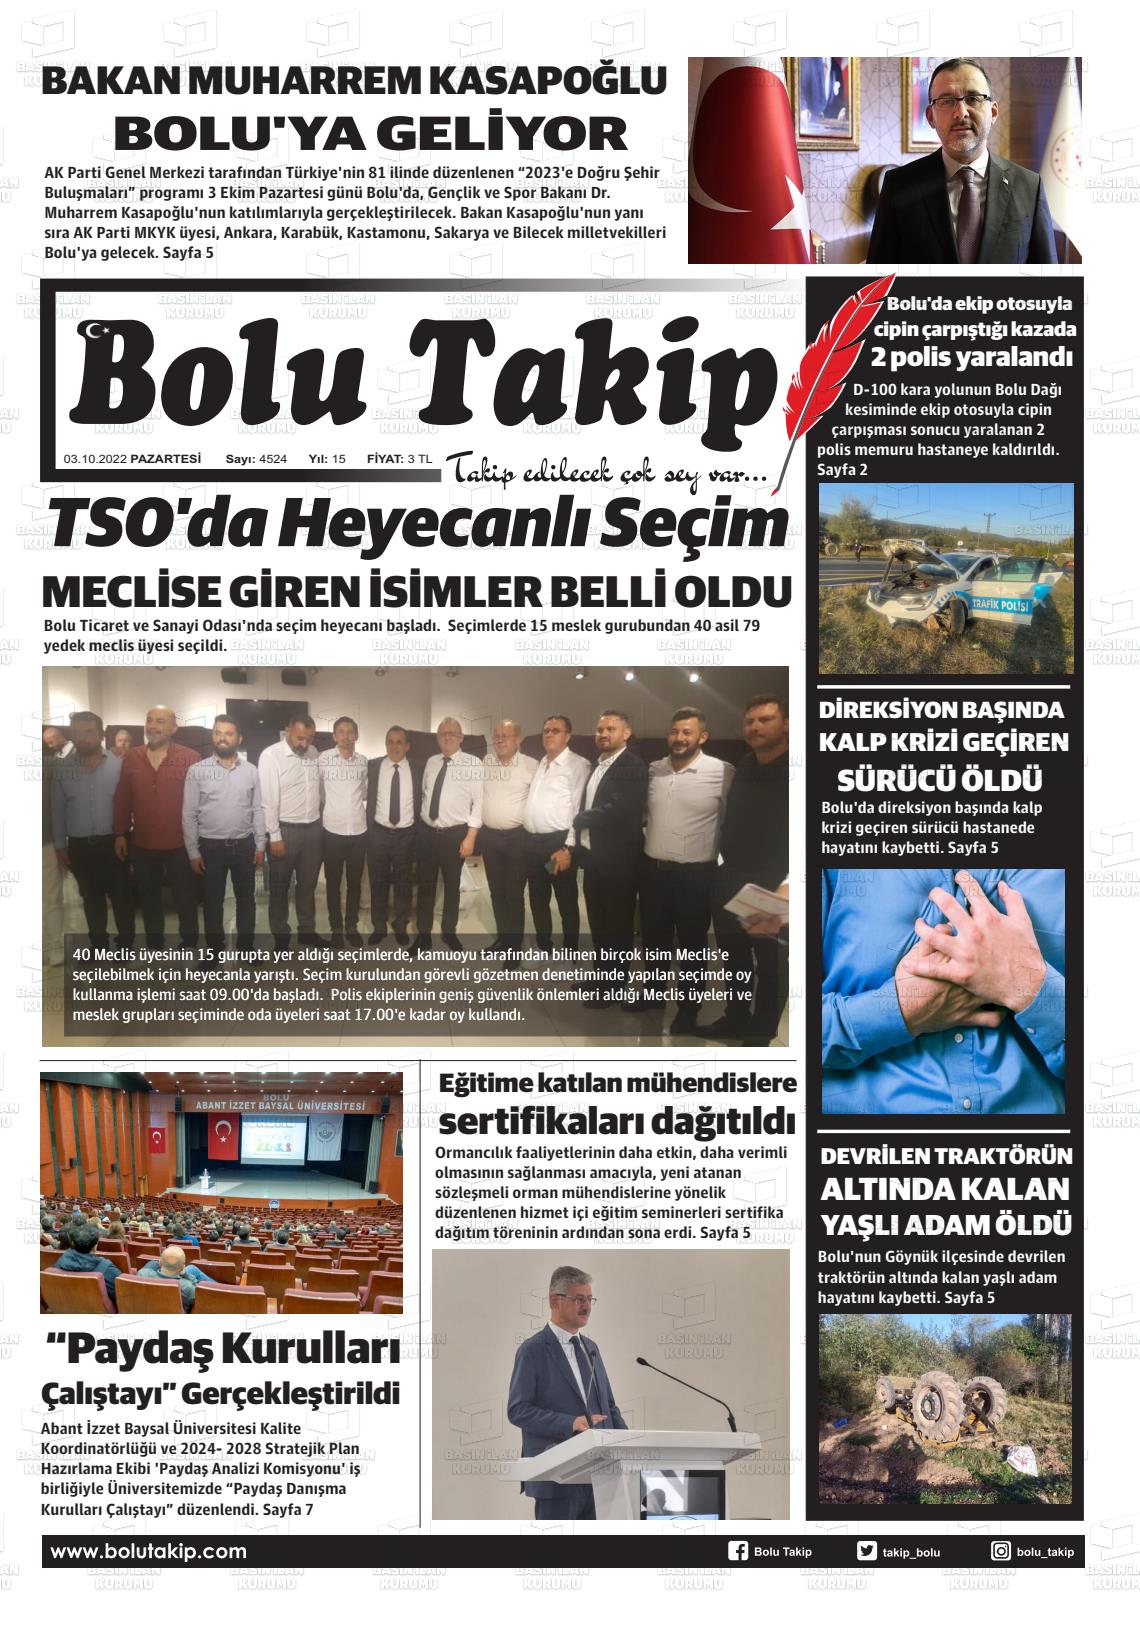 03 Ekim 2022 Bolu Takip Gazete Manşeti